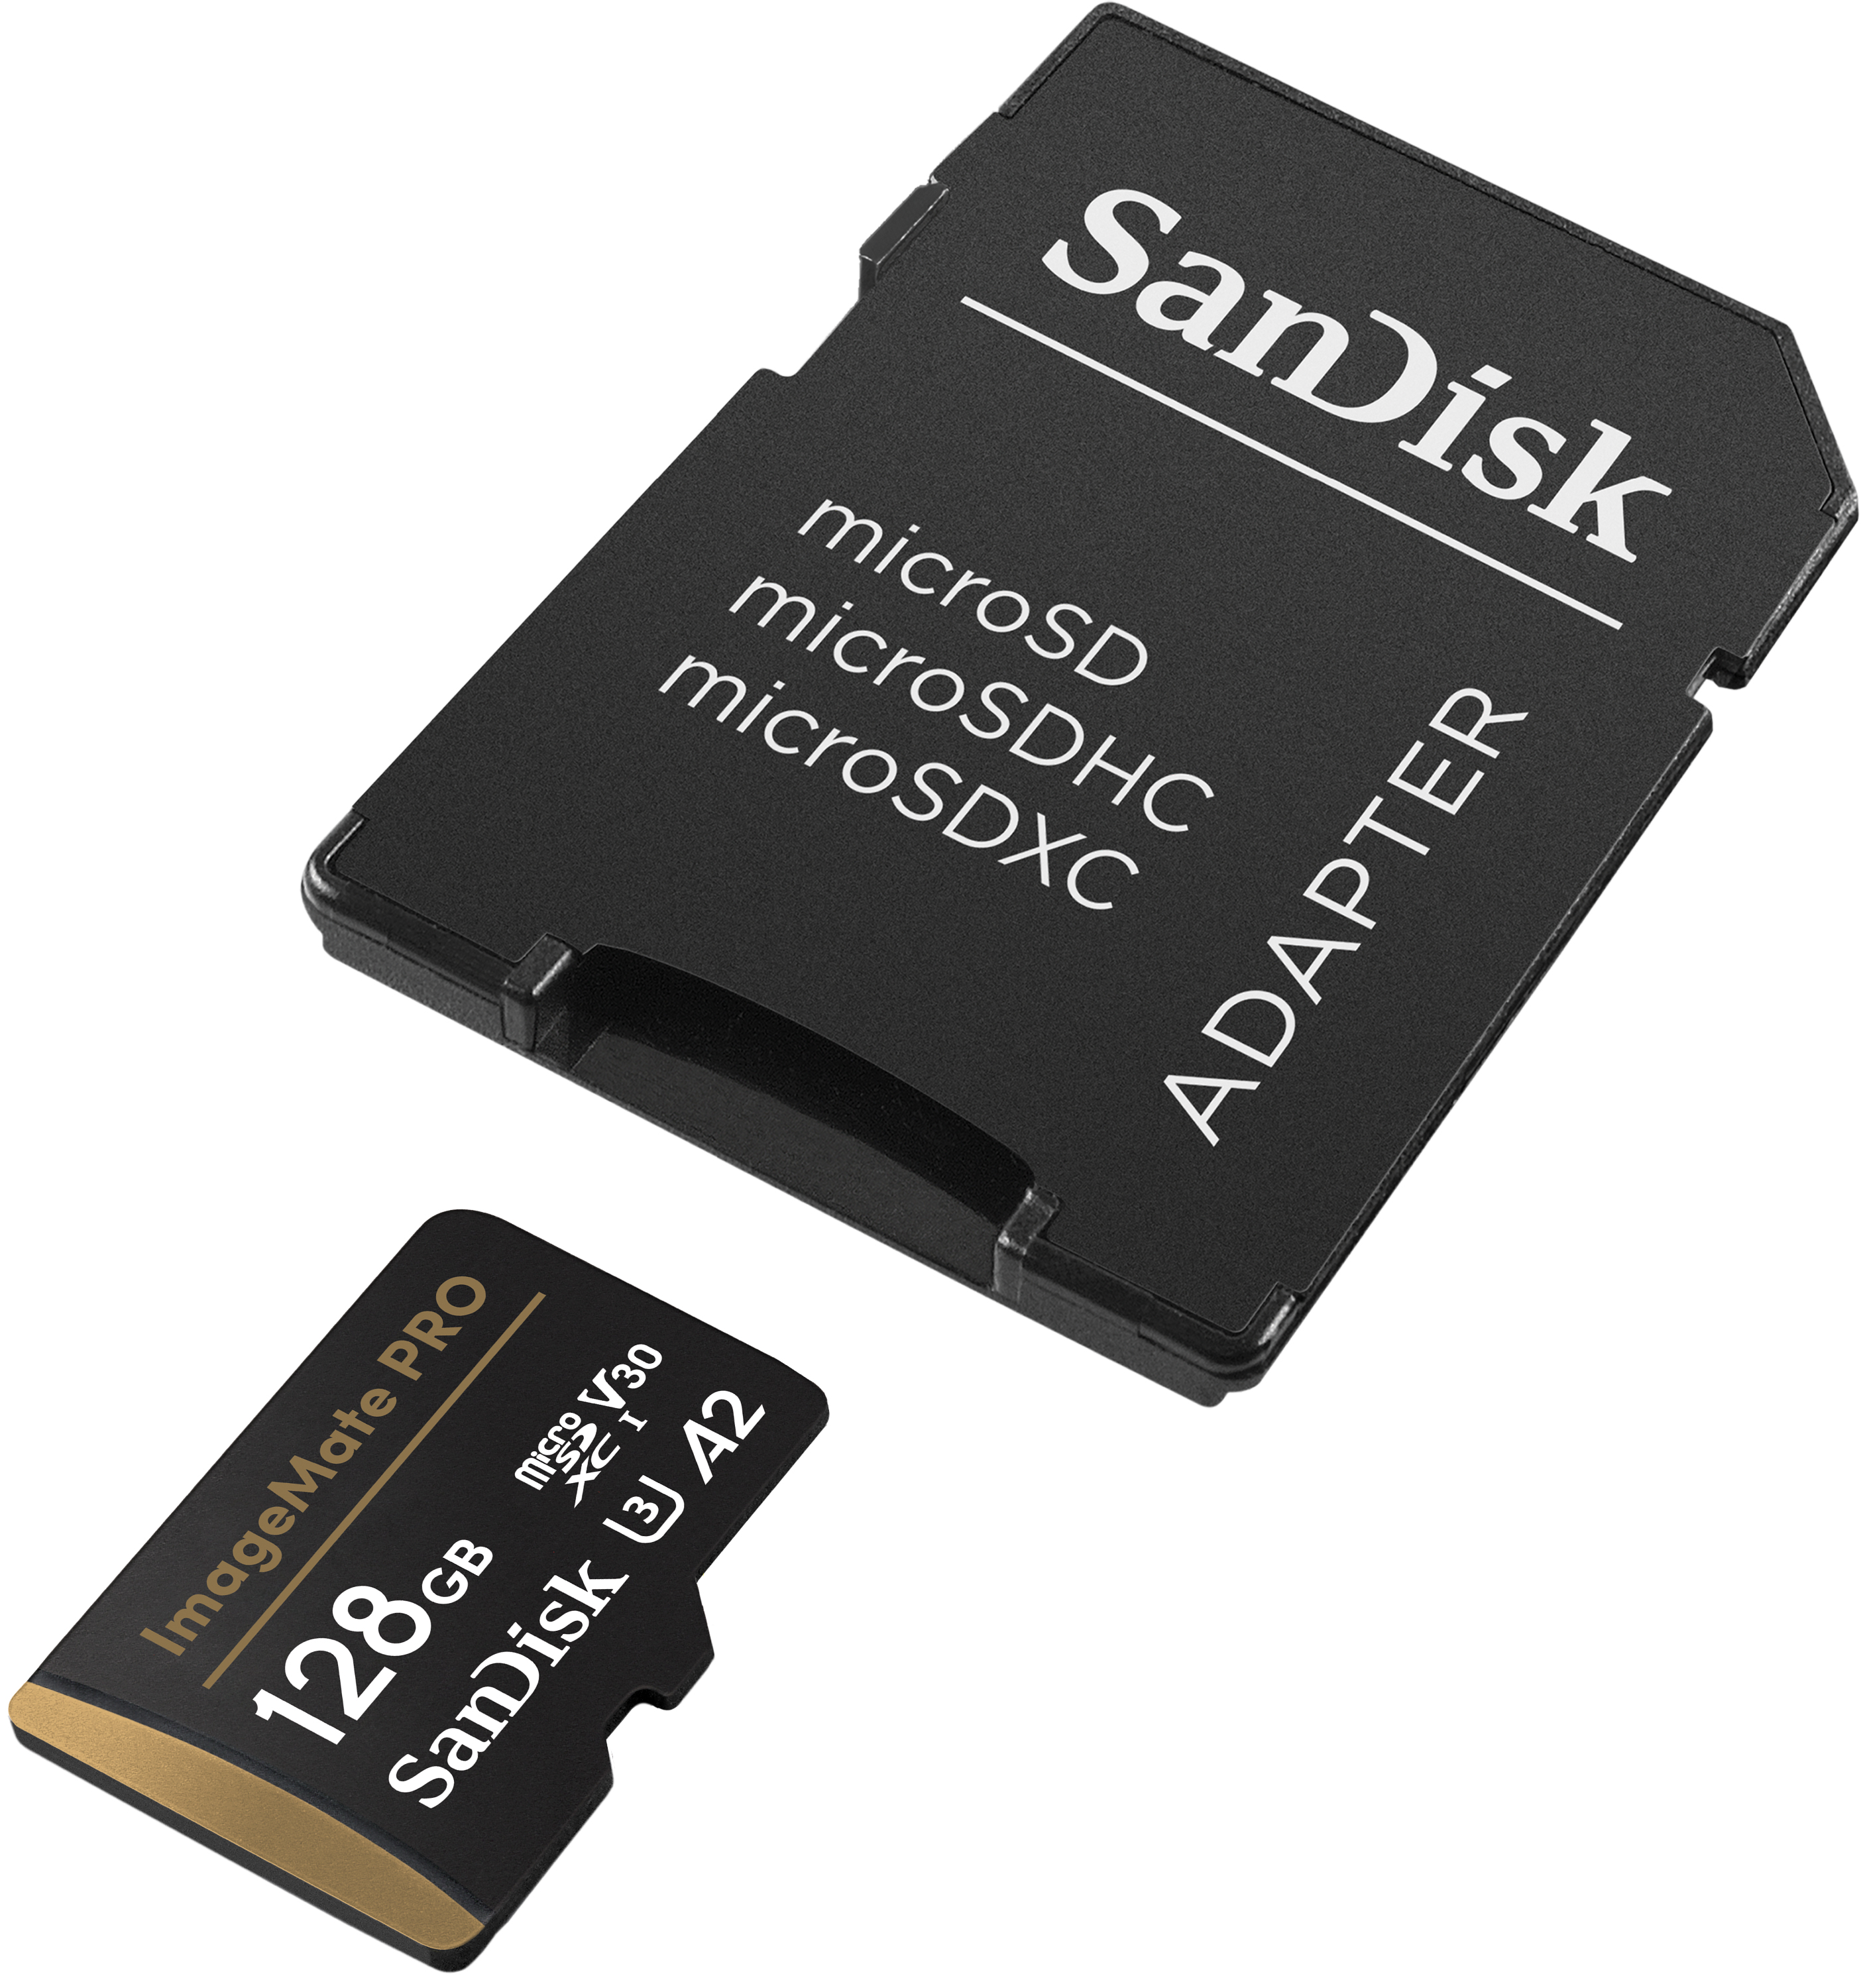 SanDisk 128GB ImageMate Pro microSDXC UHS 1 Memory Card - Up to 200MB/s - SDSQXBZ128GAW6KA - image 2 of 3